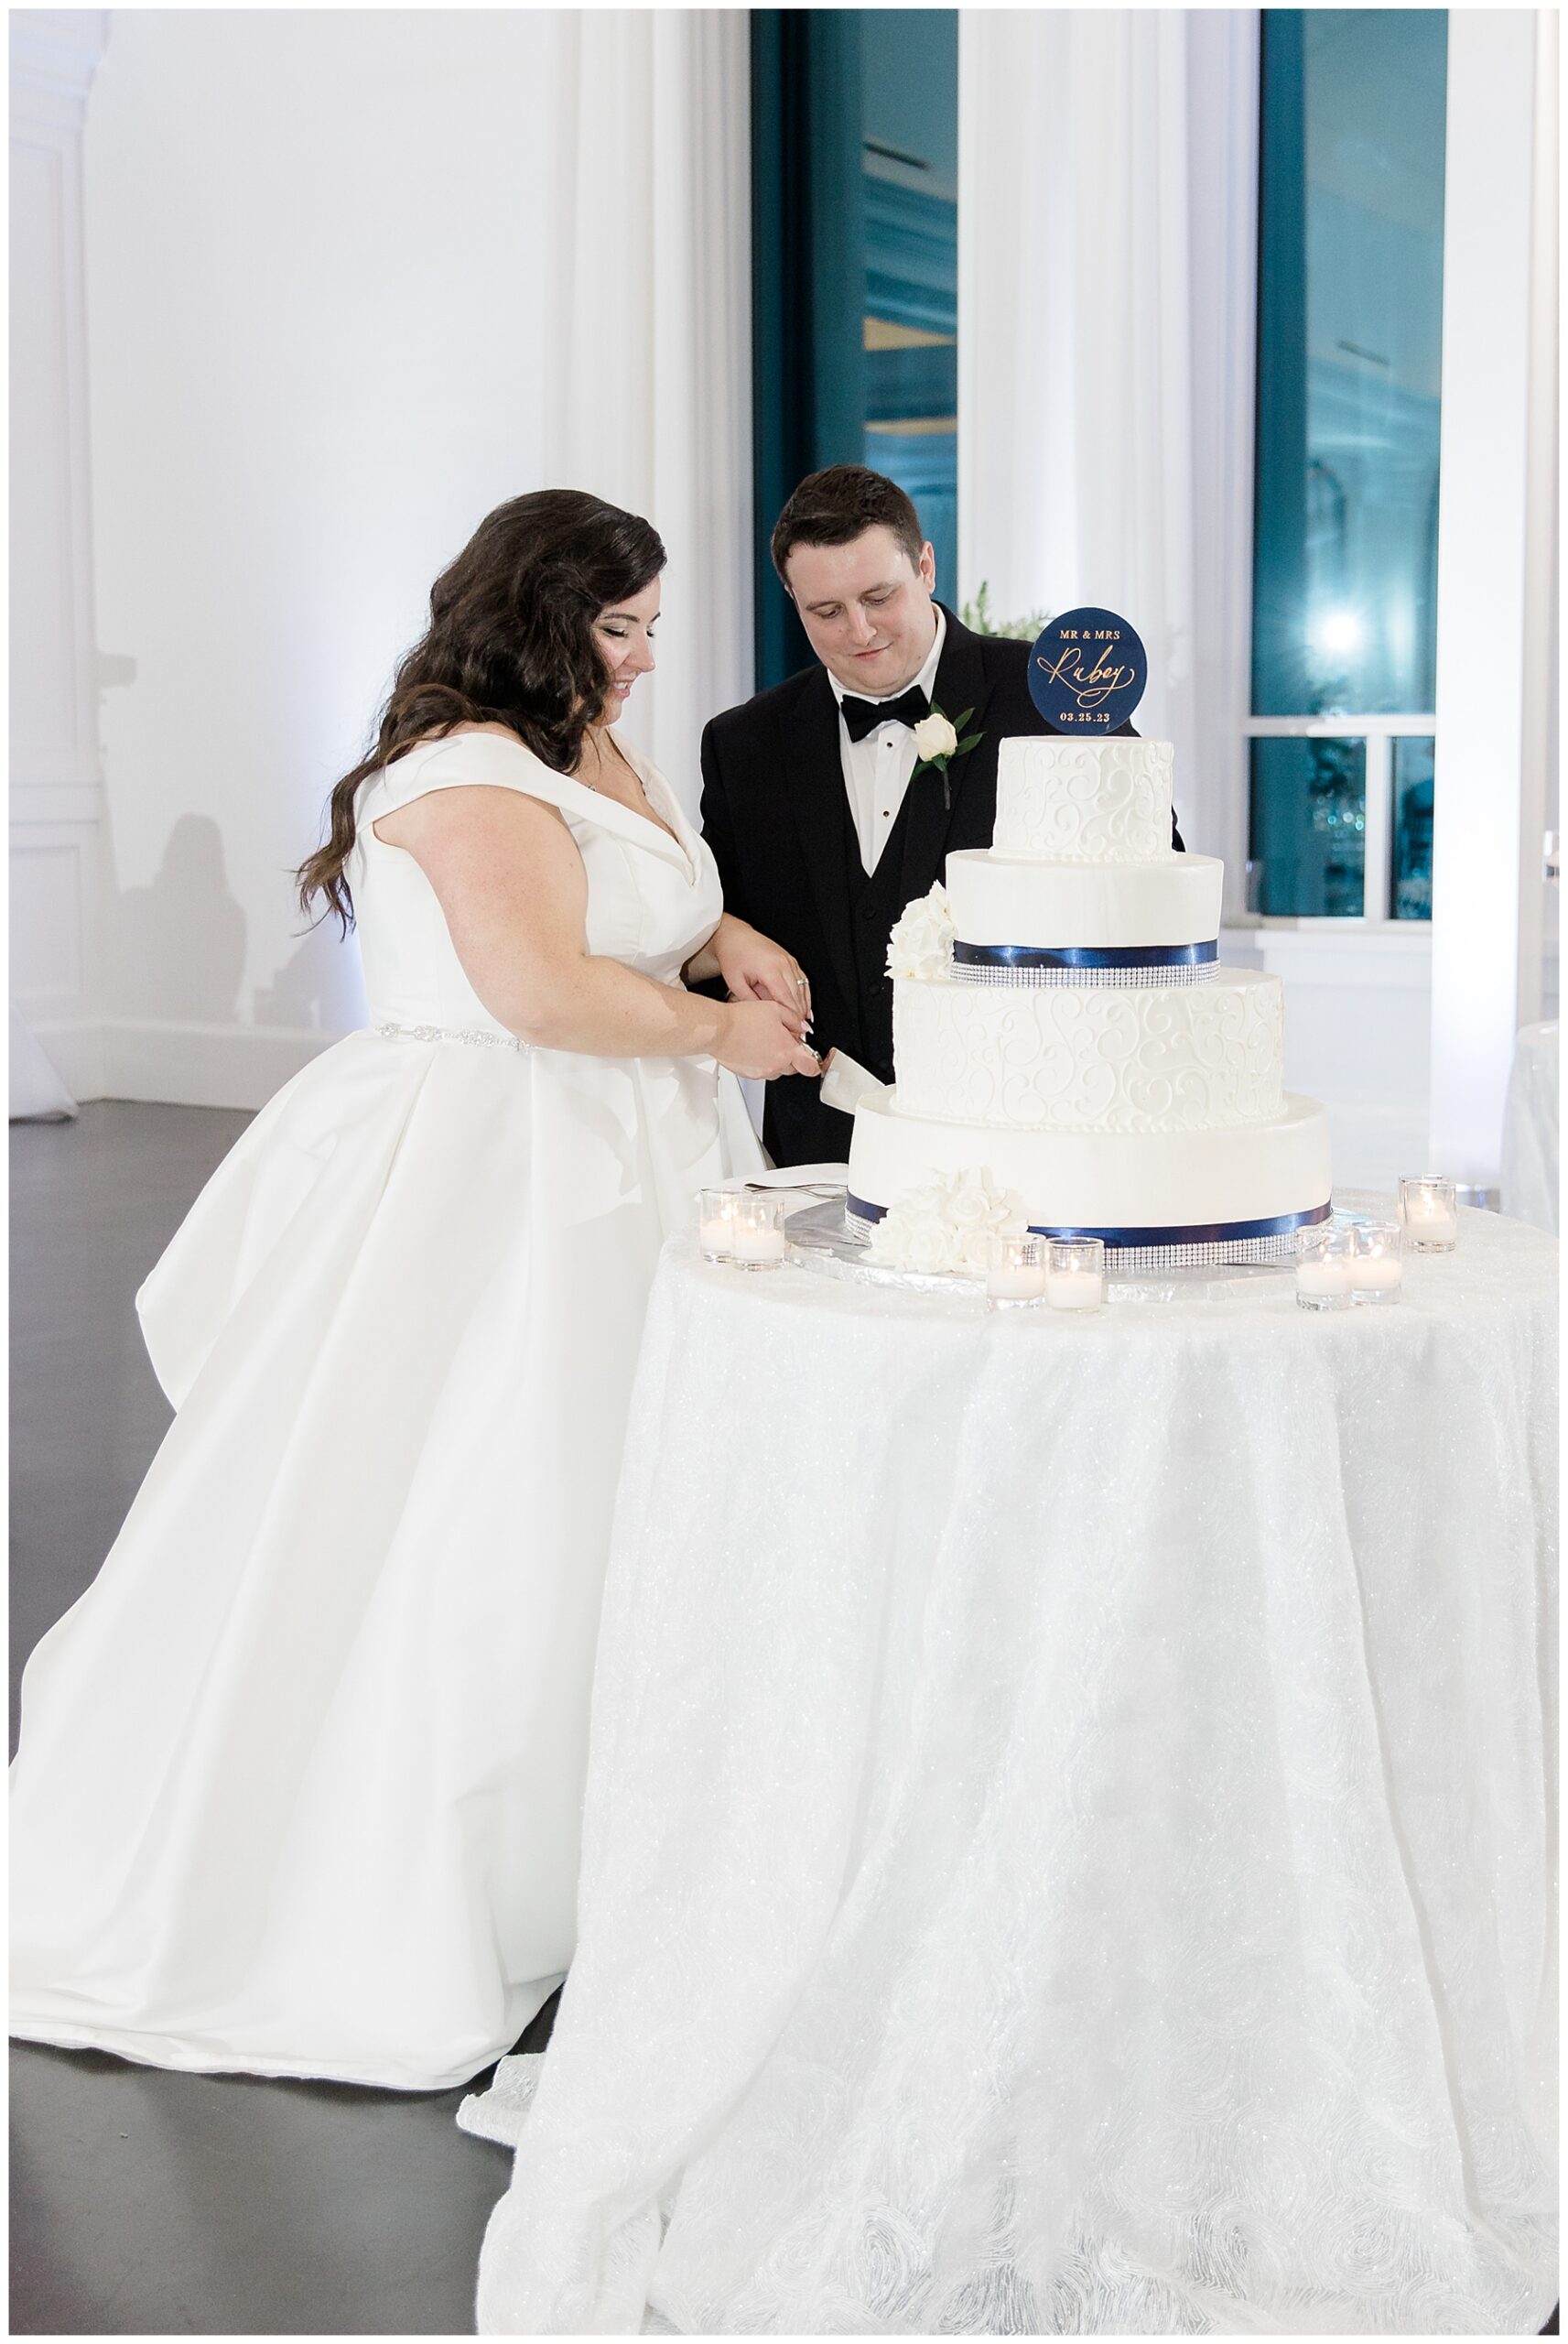 bride and groom cut their wedding cake